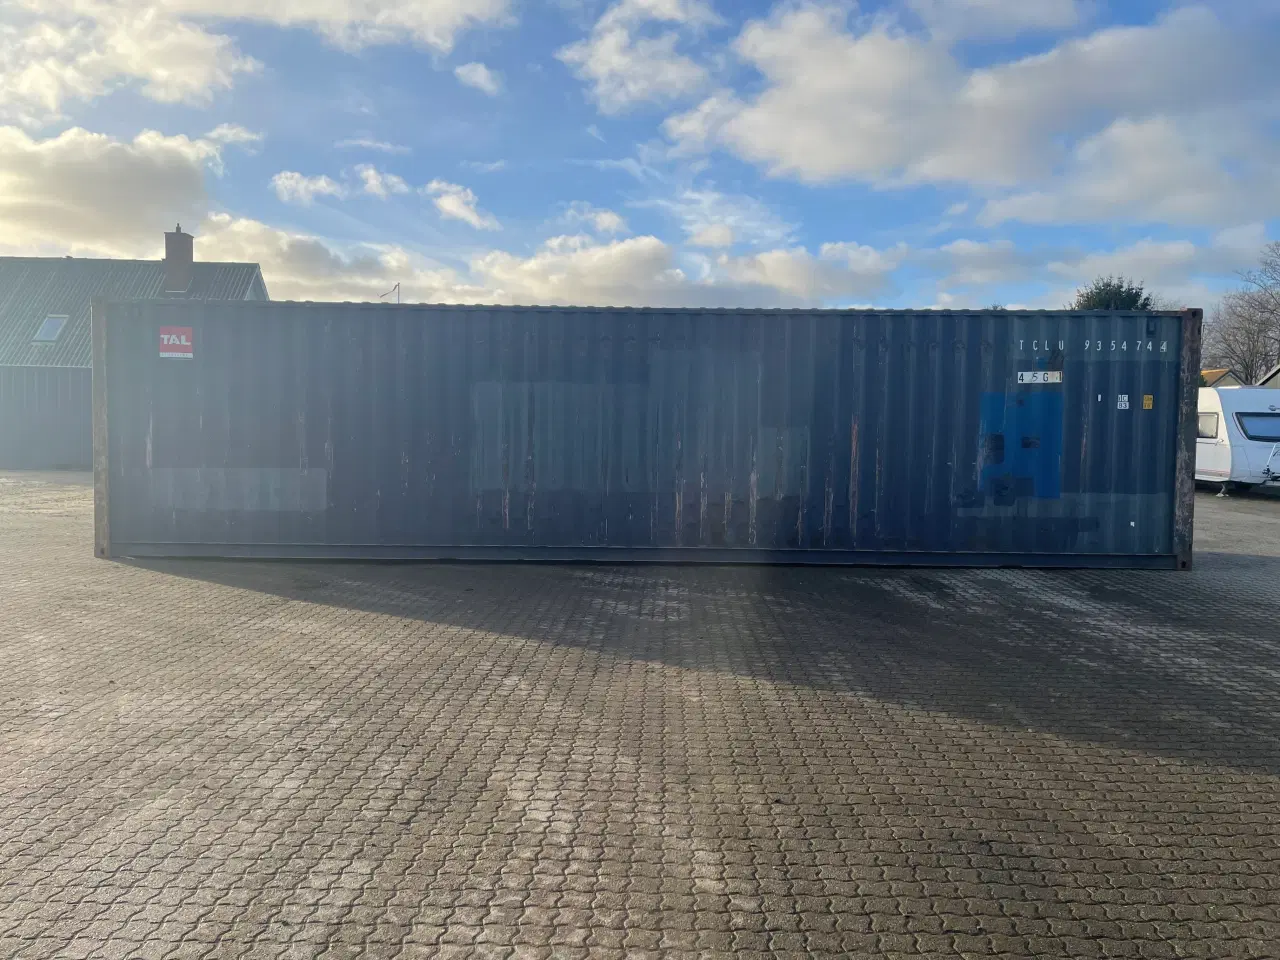 Billede 5 - 40 fods HC Container - ID: TCLU 935474-4